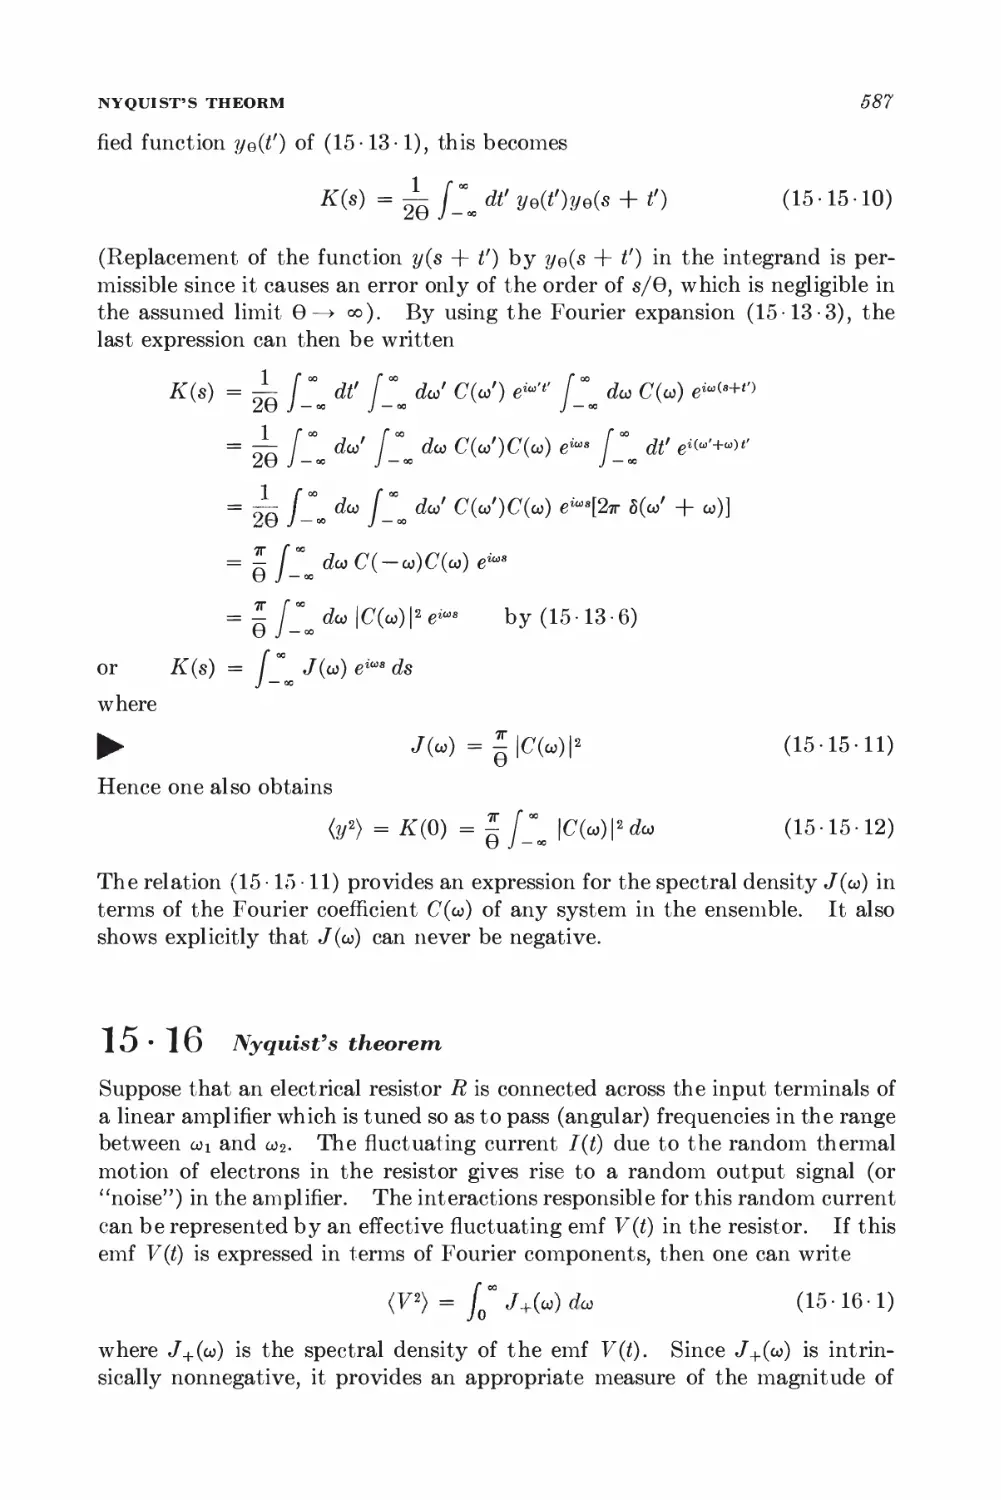 15.16 Nyquist's theorem